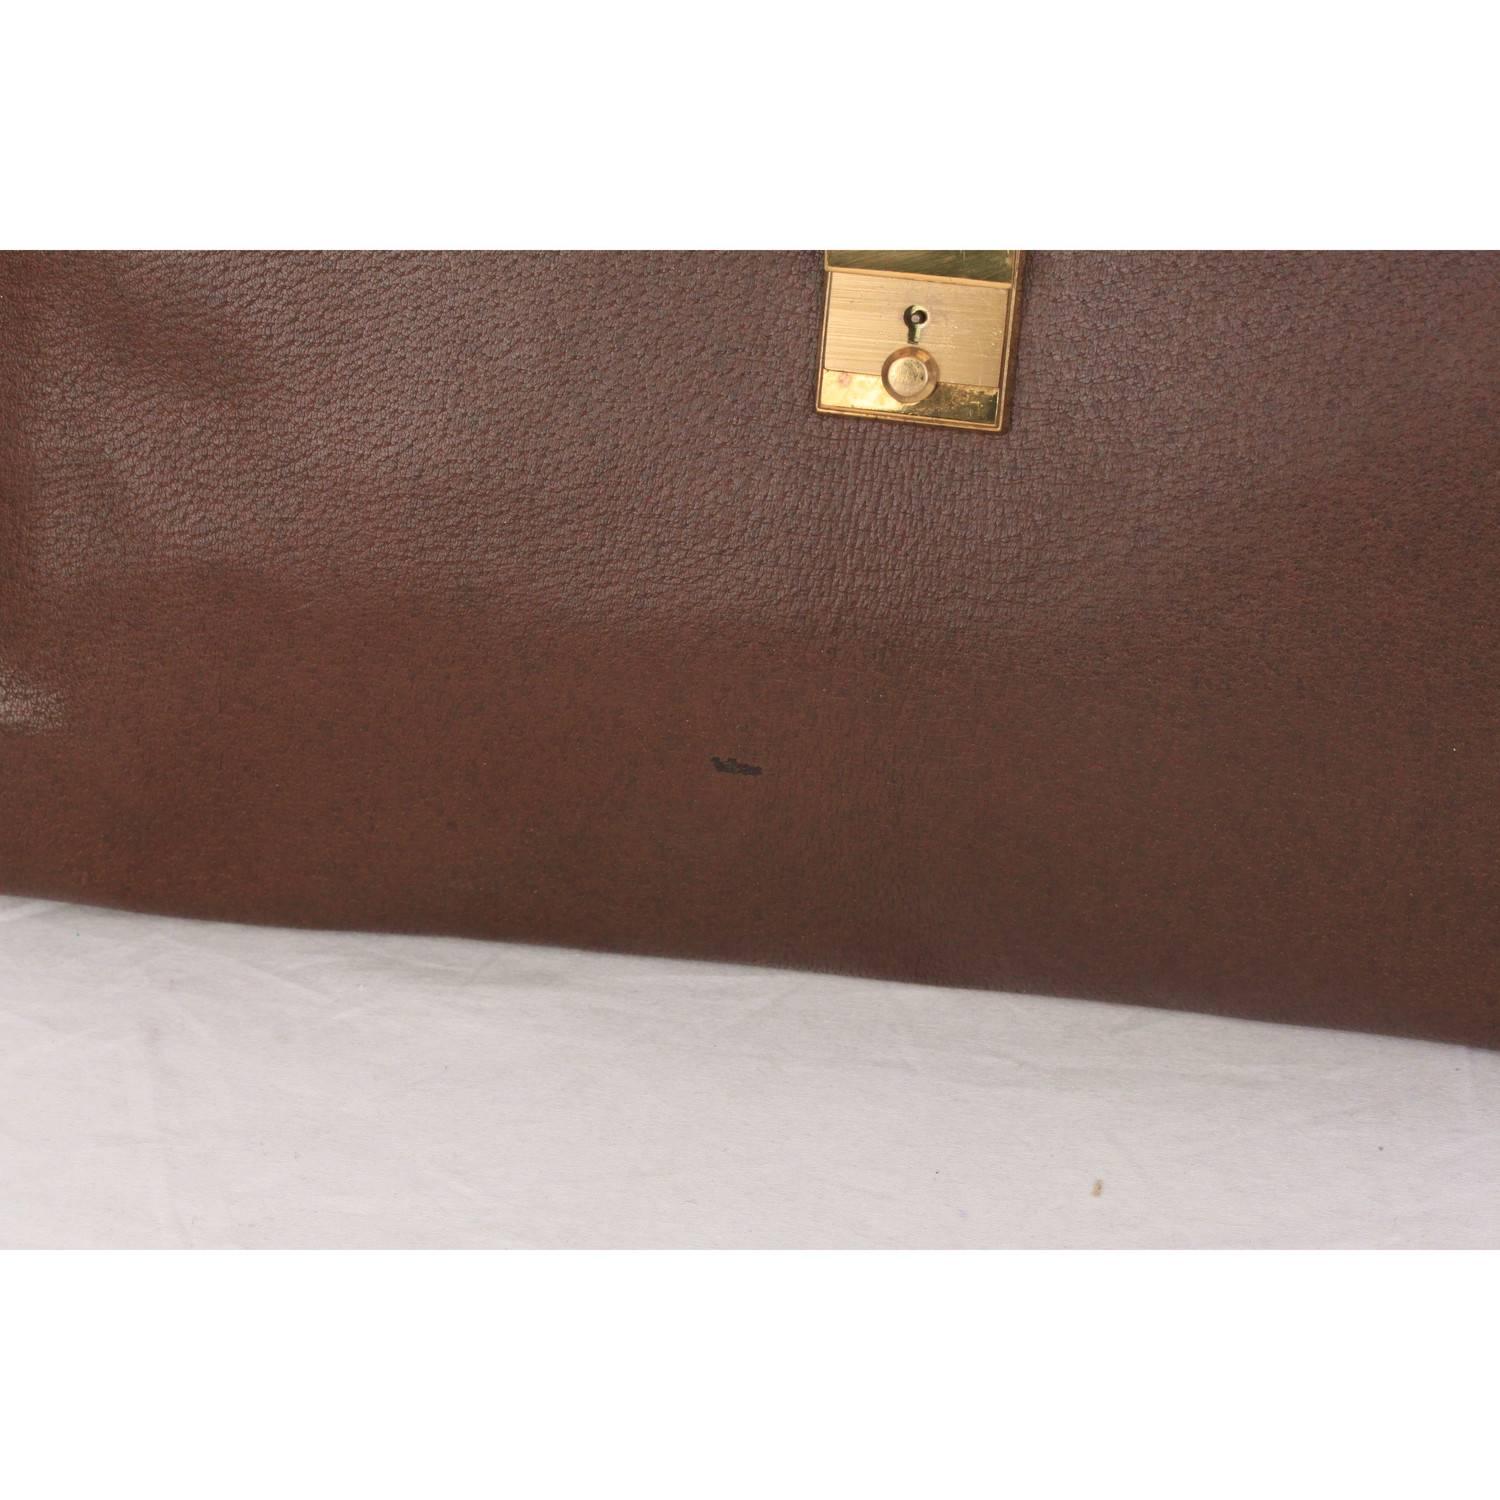 Women's or Men's GUCCI Vintage Brown Leather PORTFOLIO Document Holder